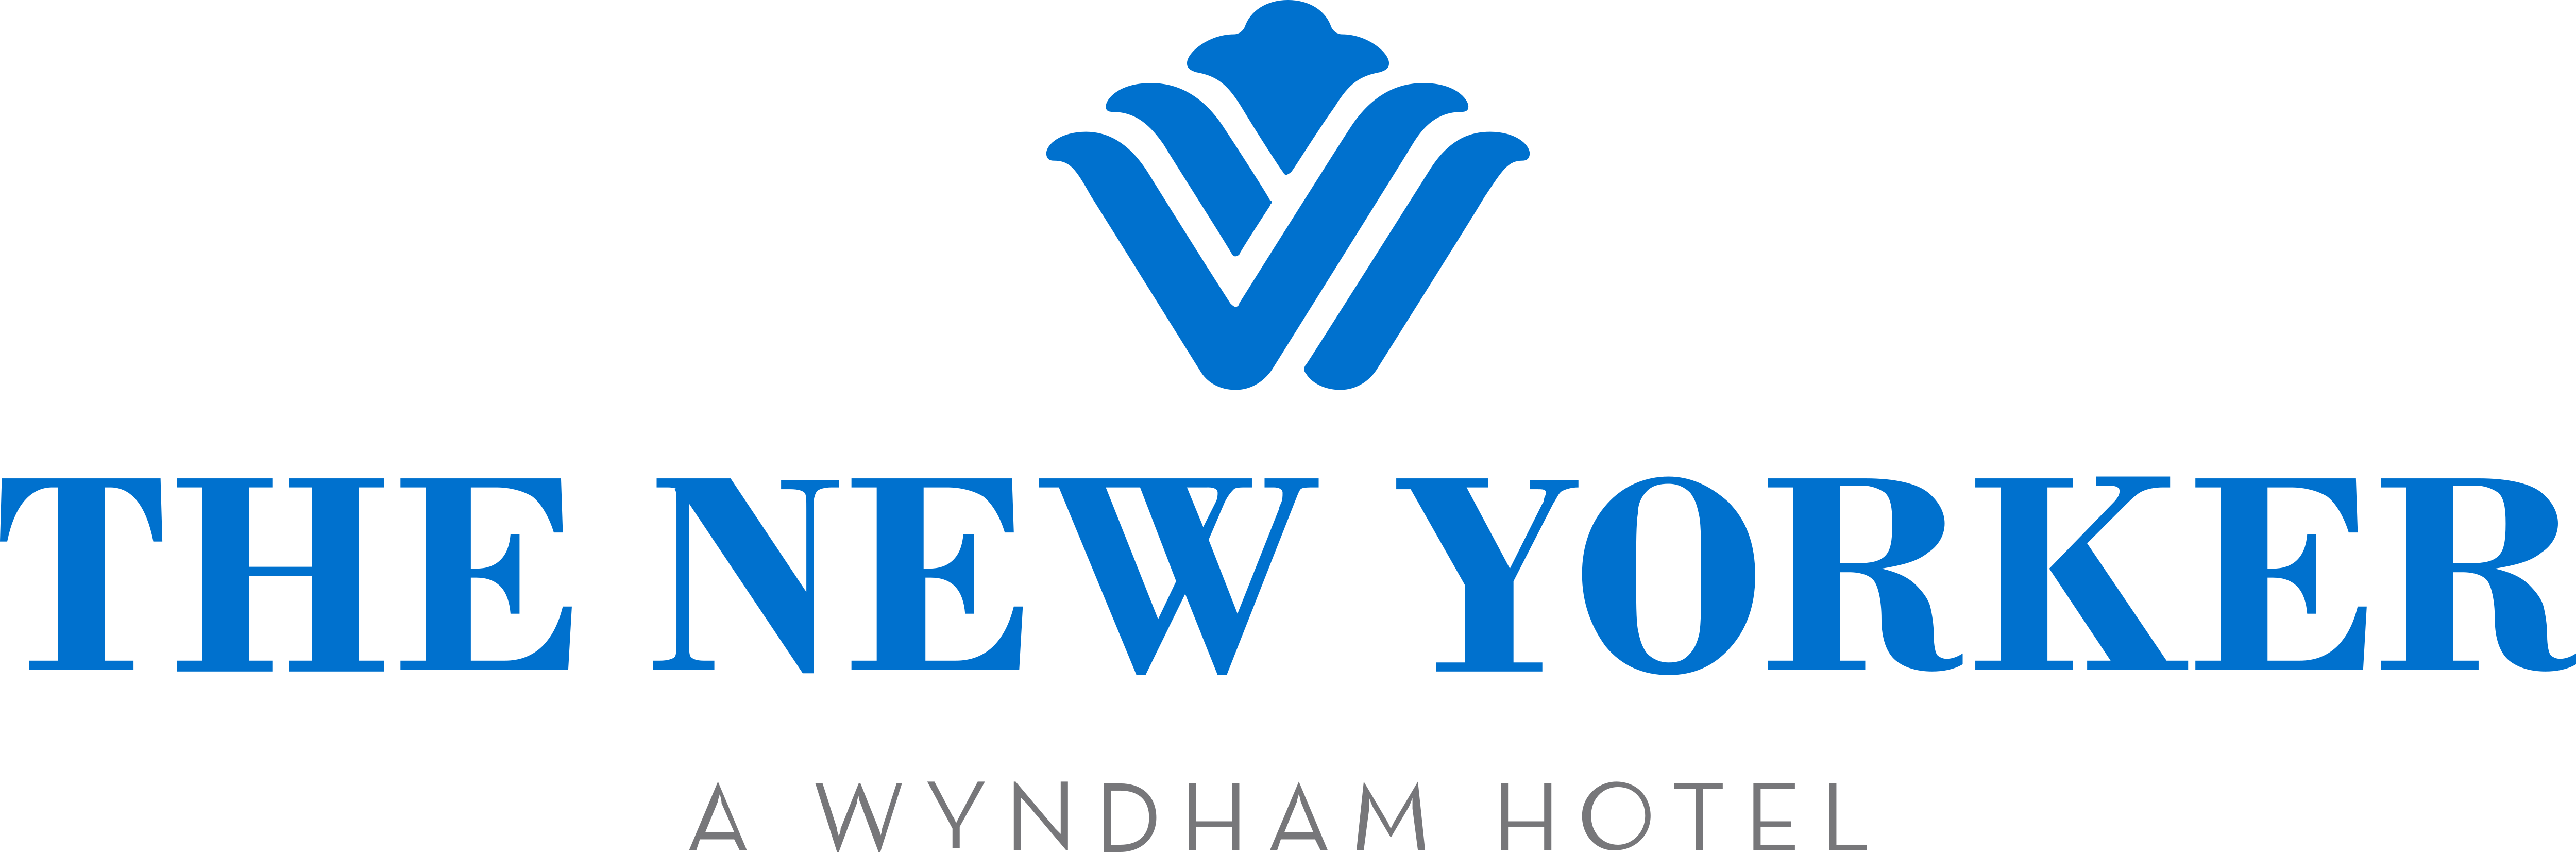 Newyorker Hotel Logos Download